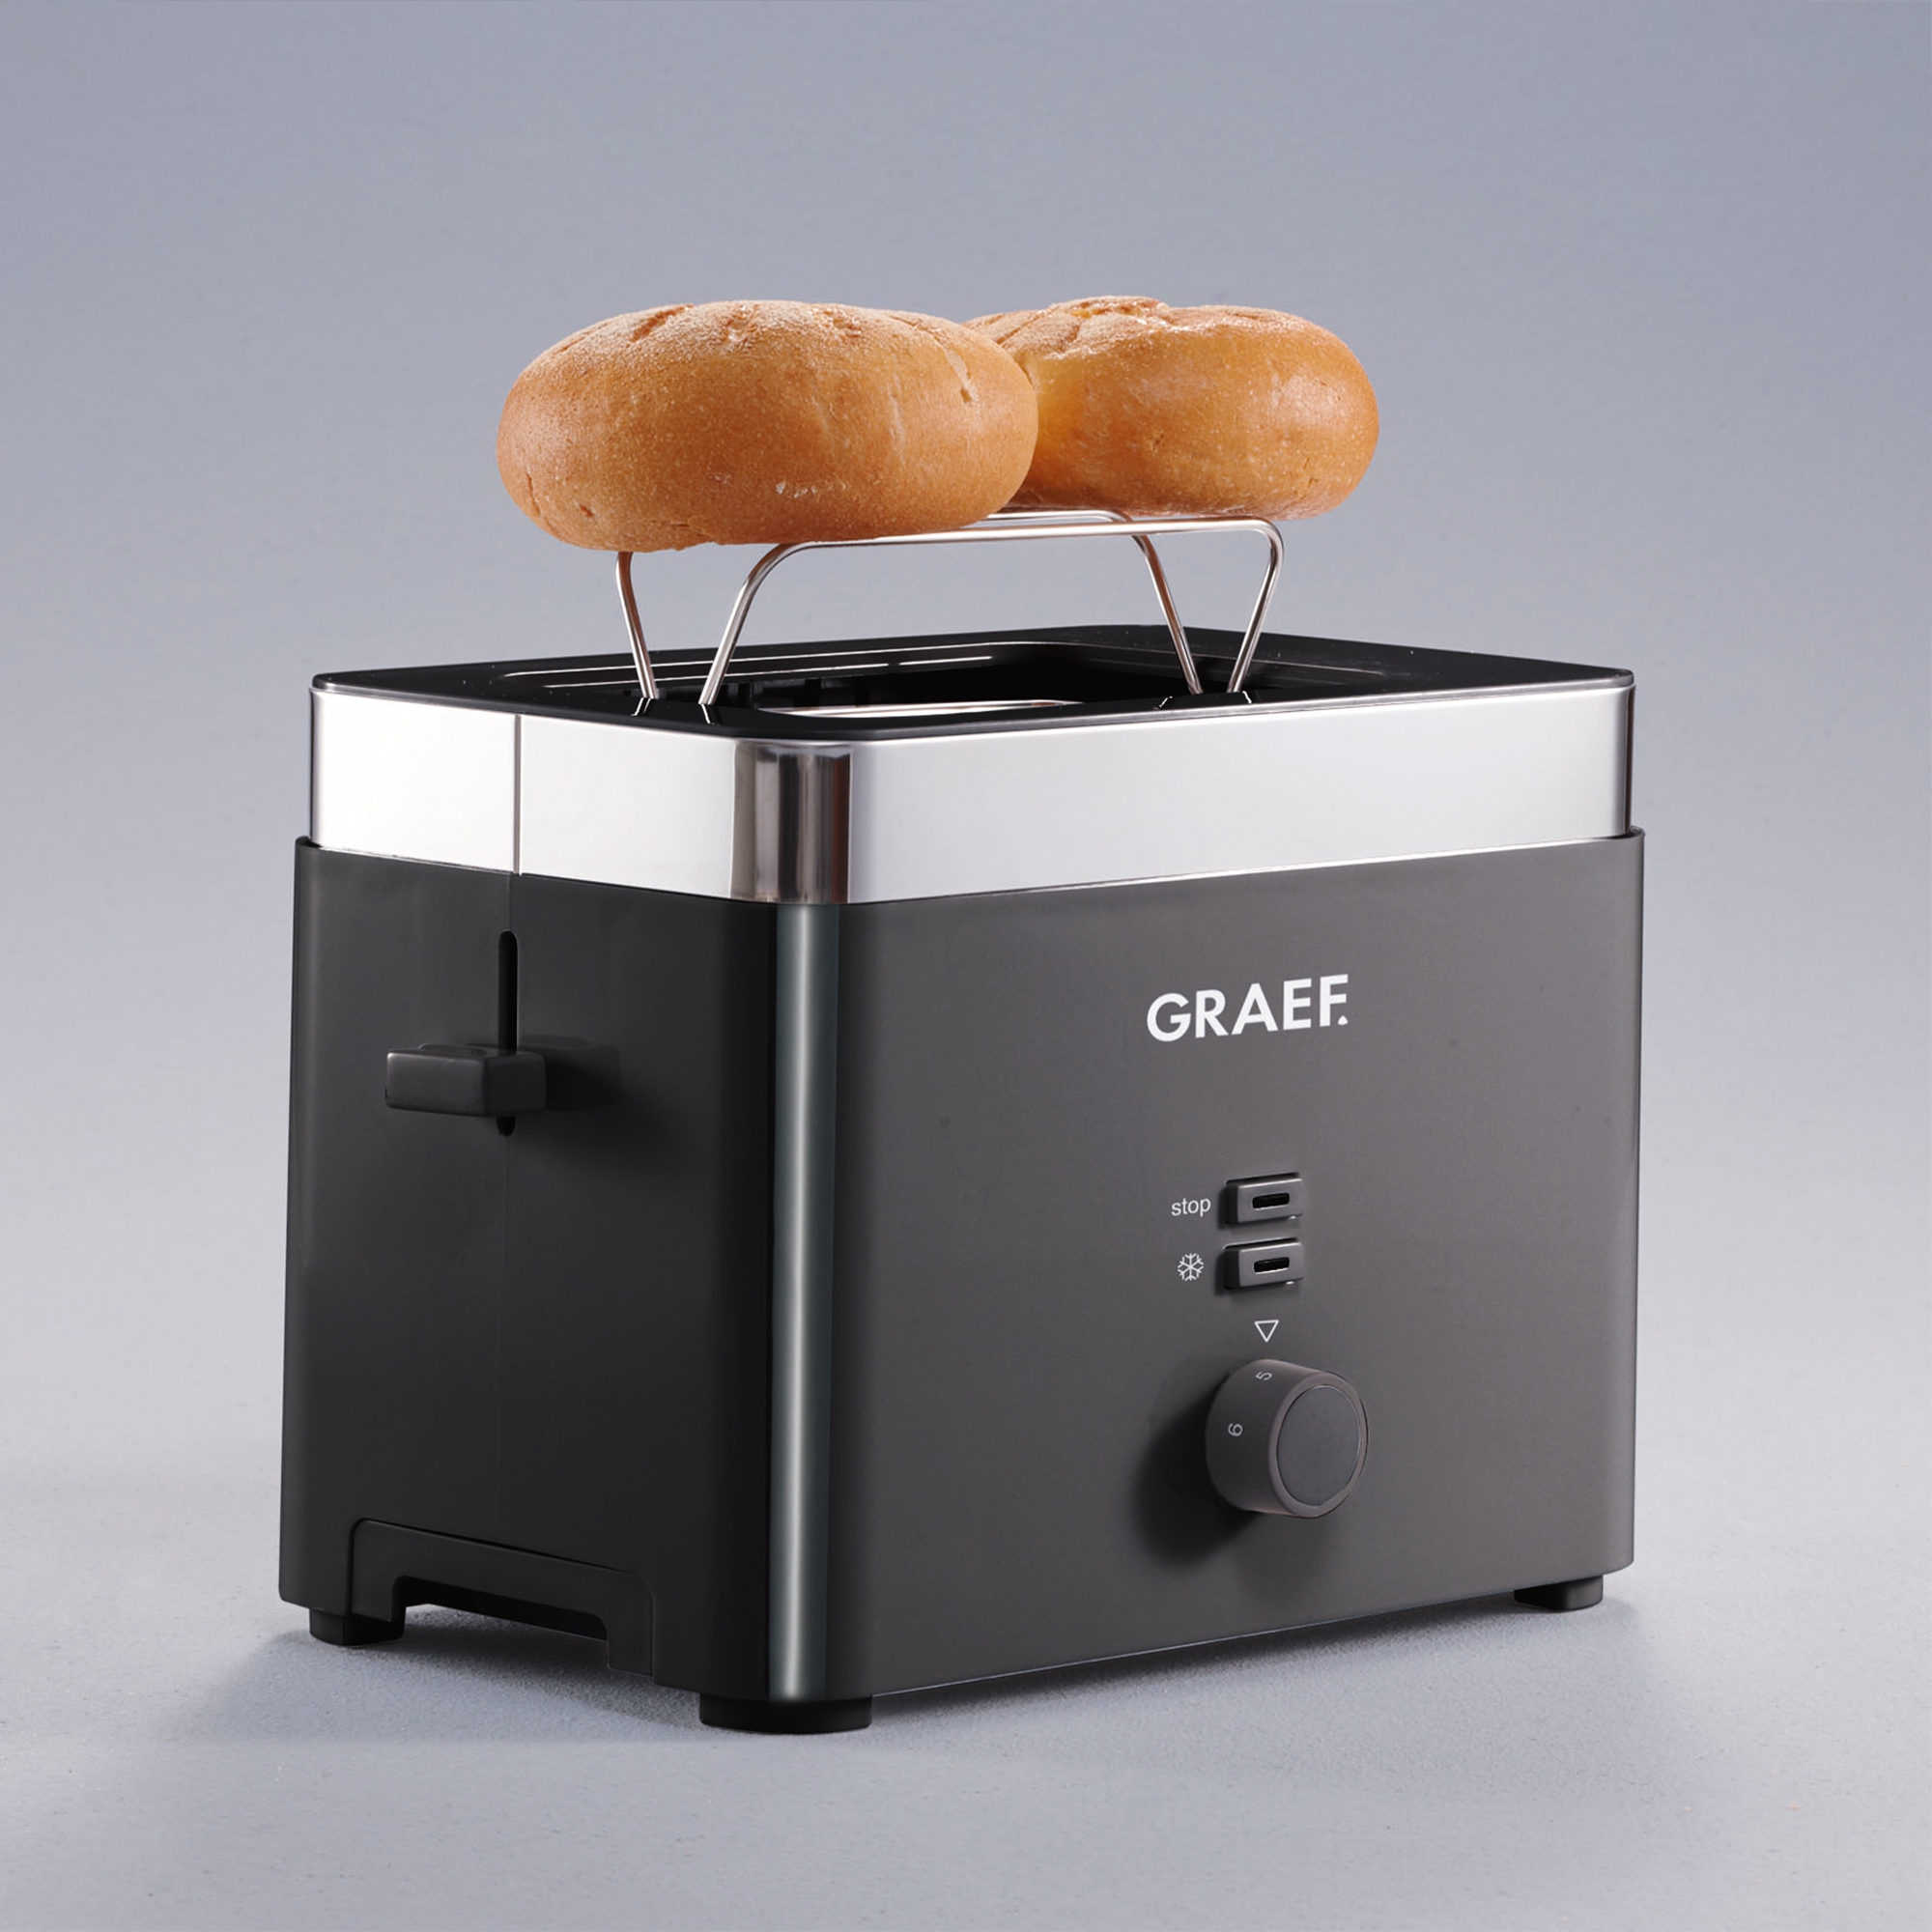 Graef - Toaster